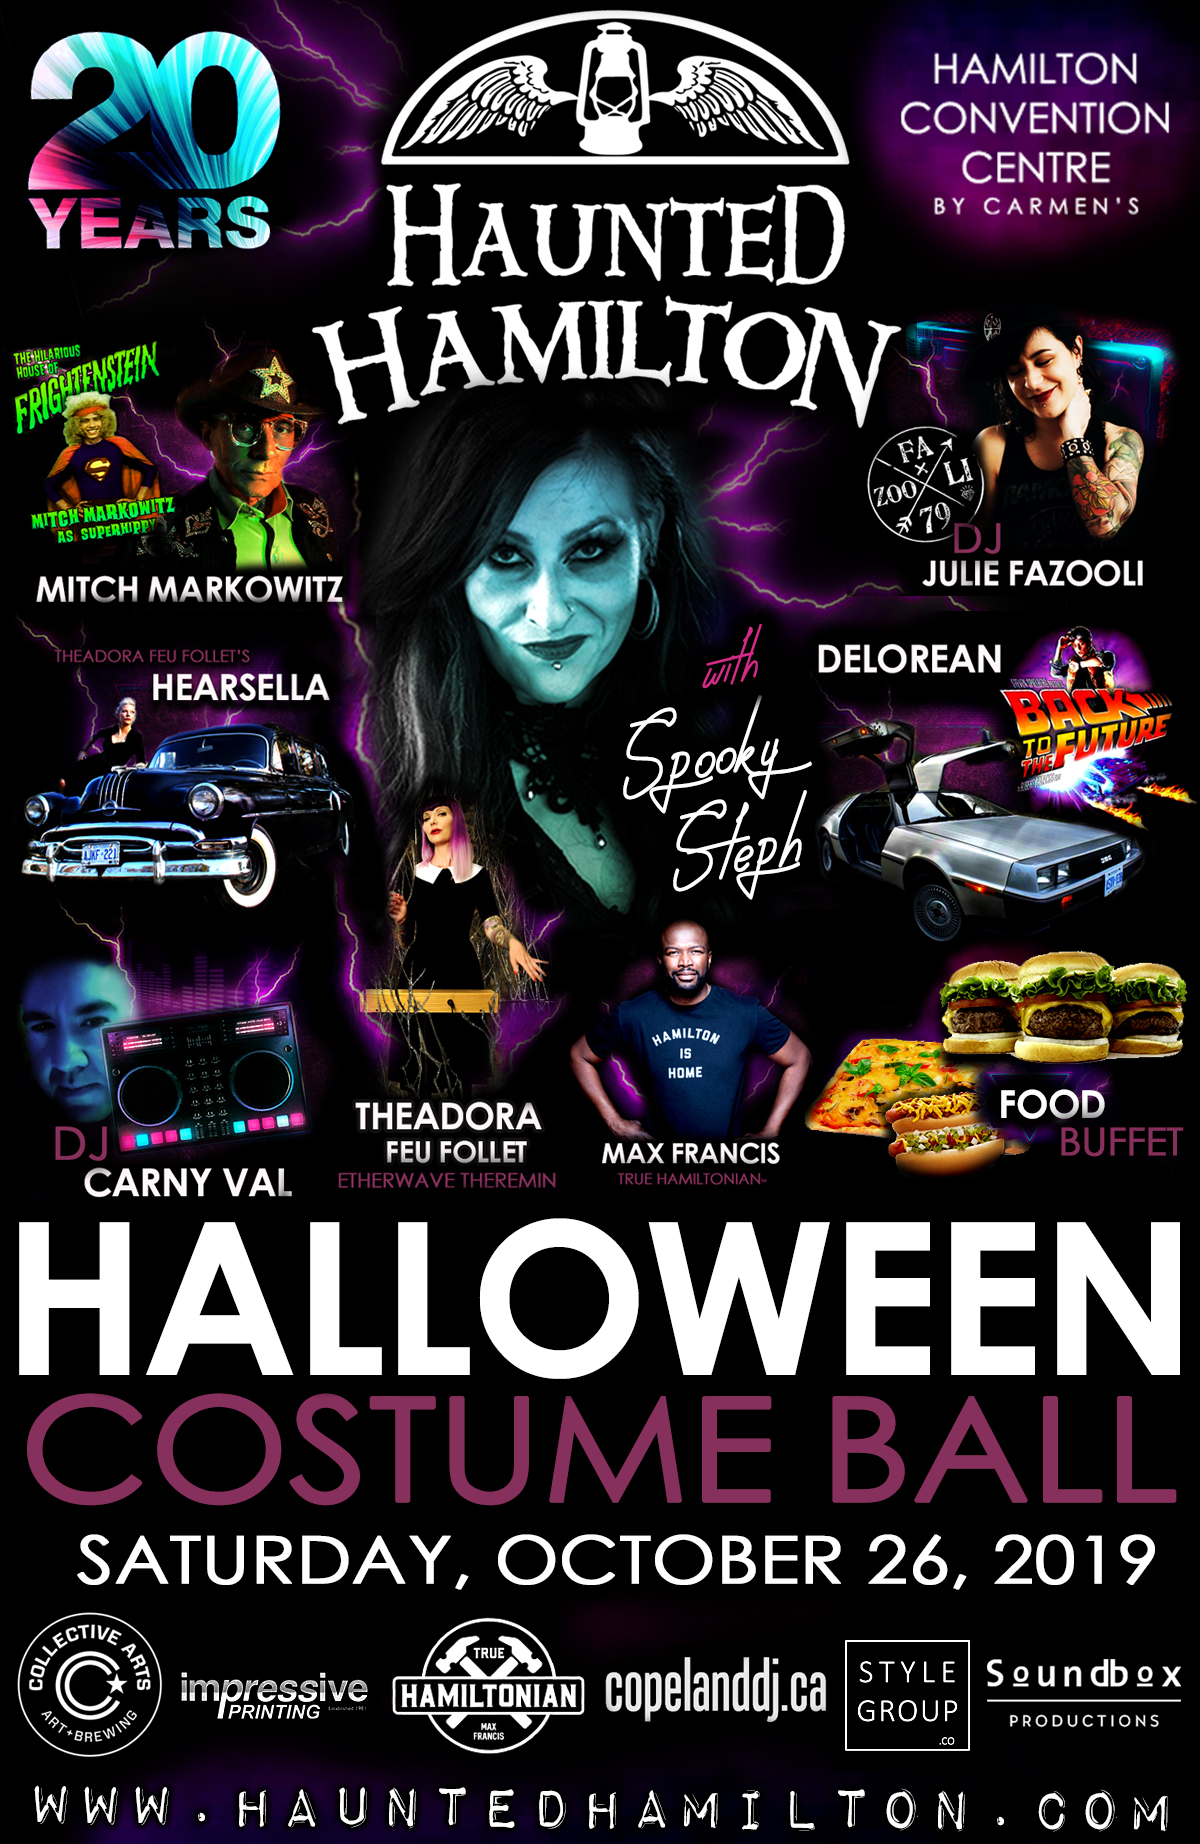 Haunted Hamilton's HALLOWEEN Costume Ball hosted by Spooky Steph | Saturday, October 26, 2019, The Hamilton Convention Centre by Carmens | Celebrating 20 Years of Haunted Hamilton! | Hamilton, Ontario, Canada